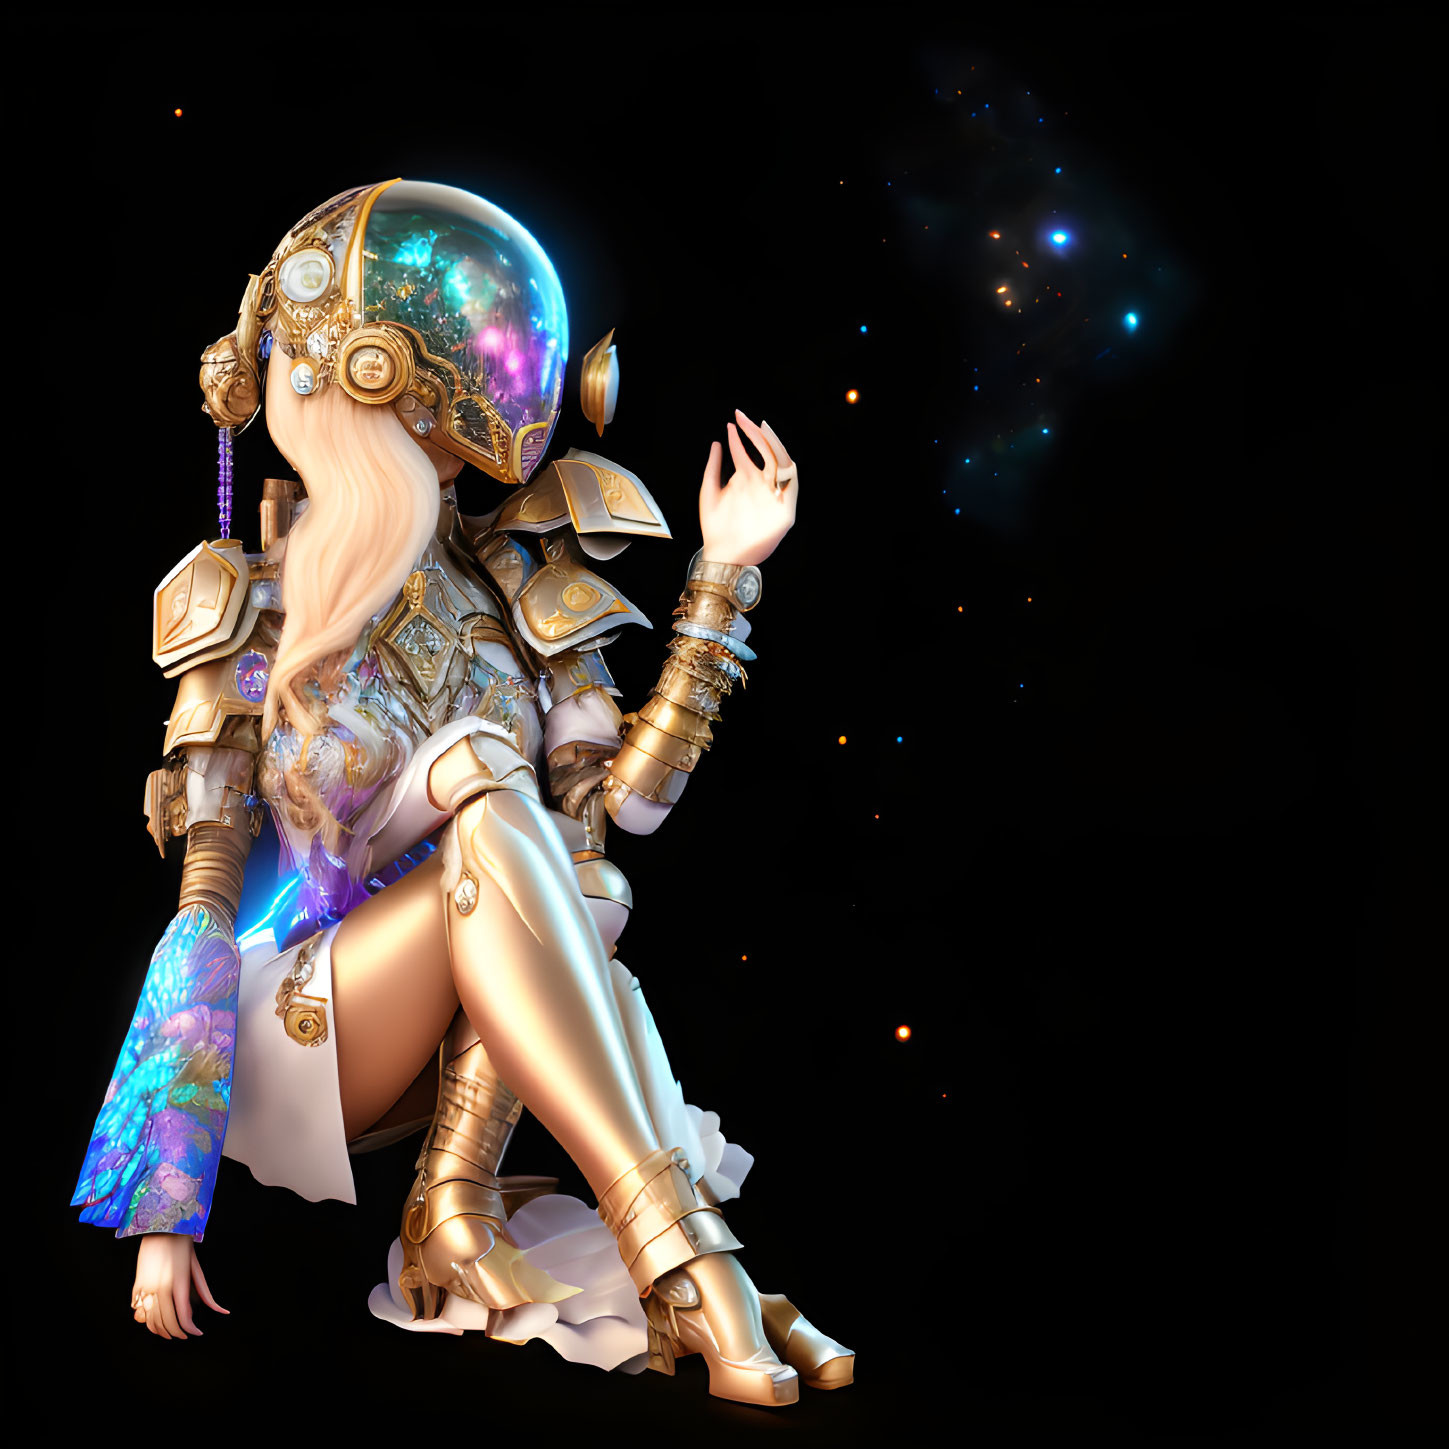 Futuristic female figure in cosmic armor against starry backdrop